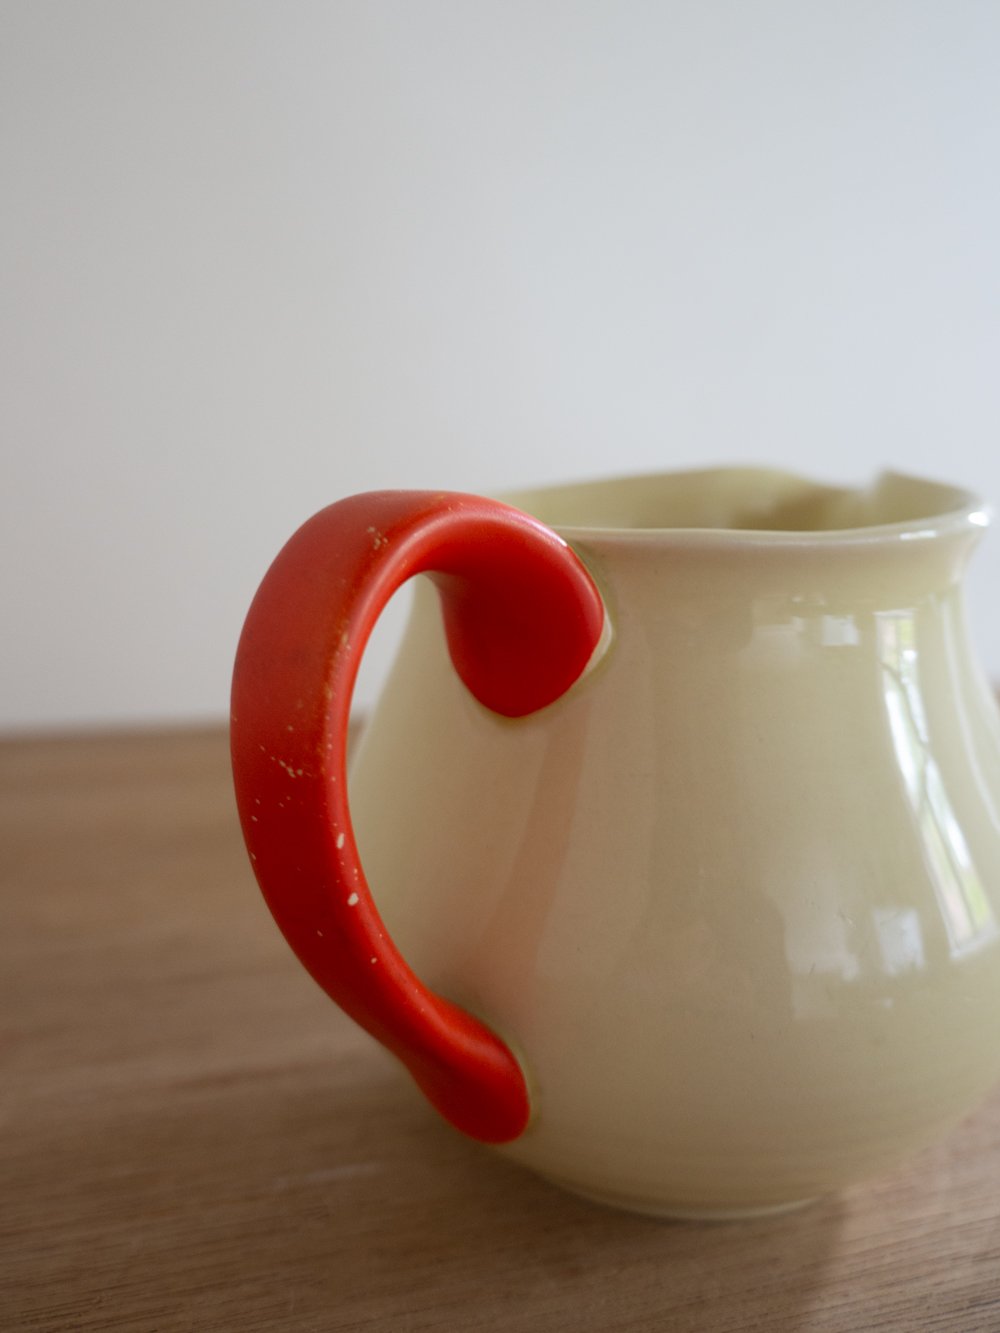 Image of cream pitcher